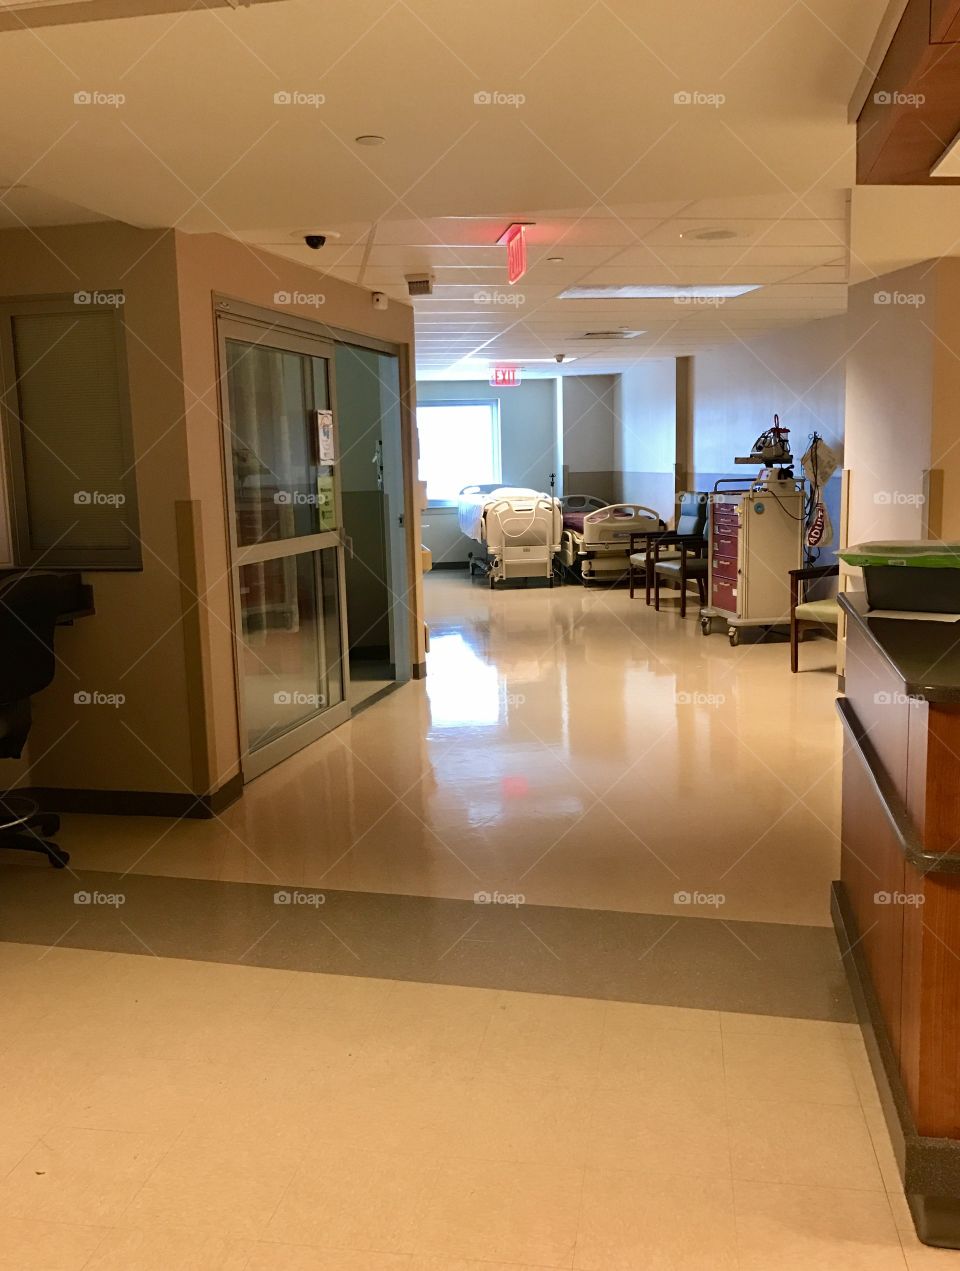 Hospital, End of the Hallway